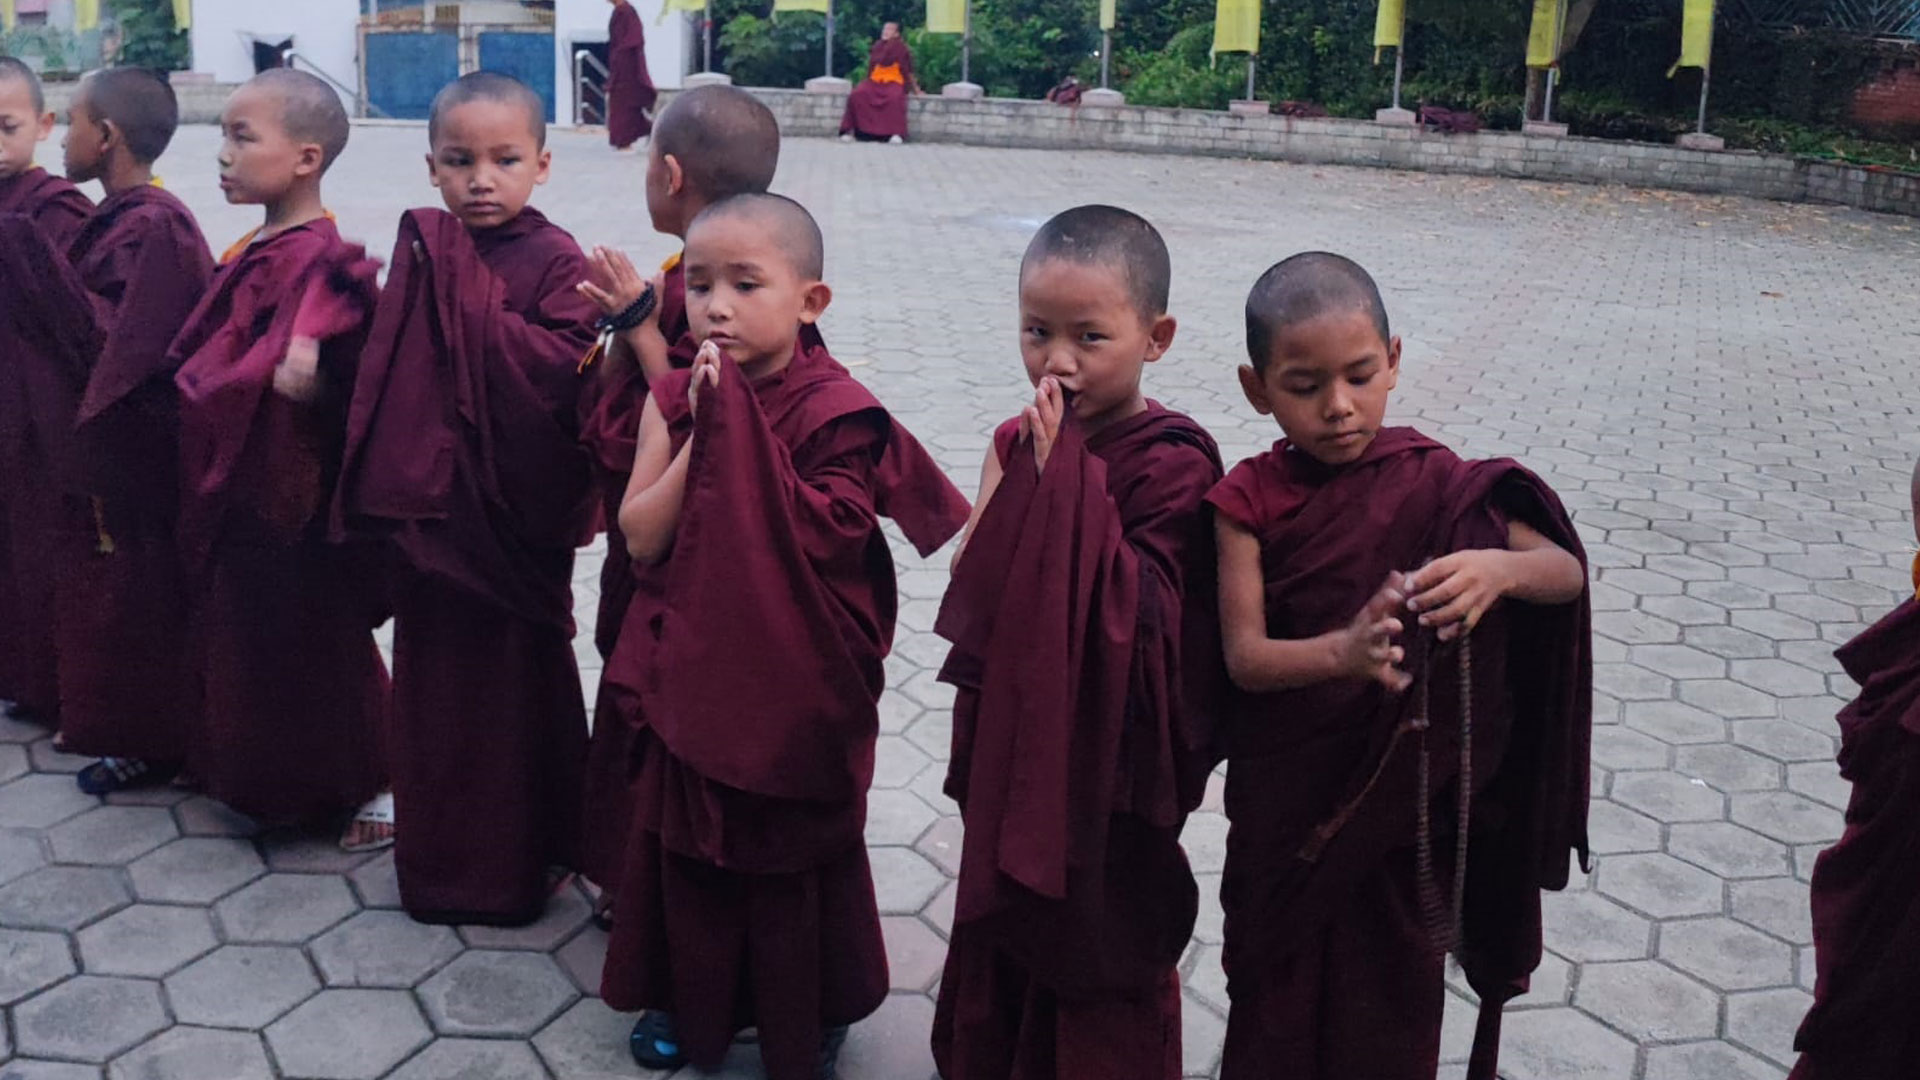 Young monk in monastery of nepal, Volunteer in nepal